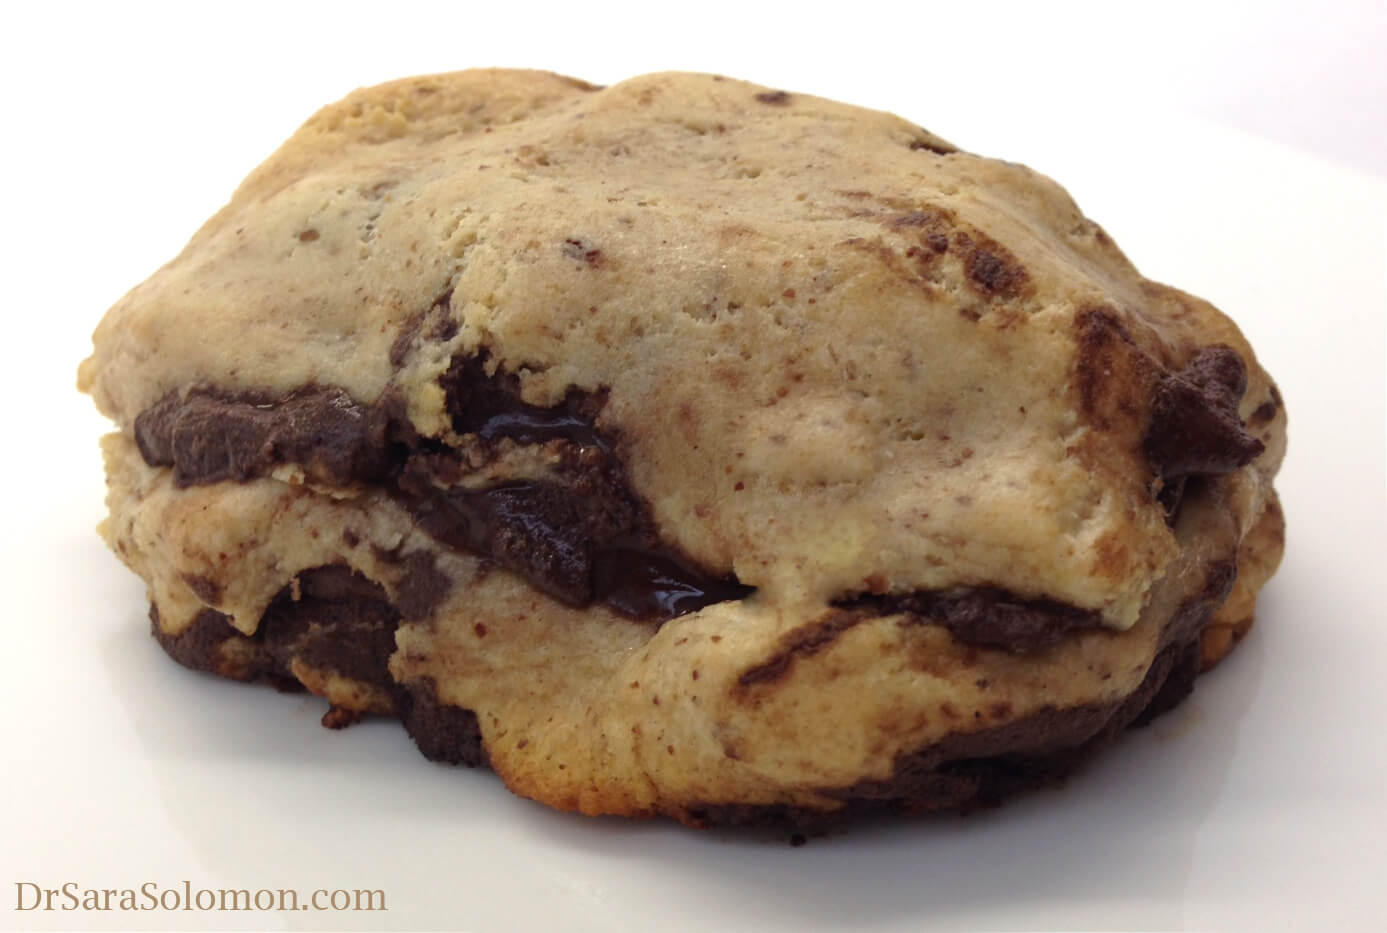 PB Cup Stuffed Chocolate Chip Cookie